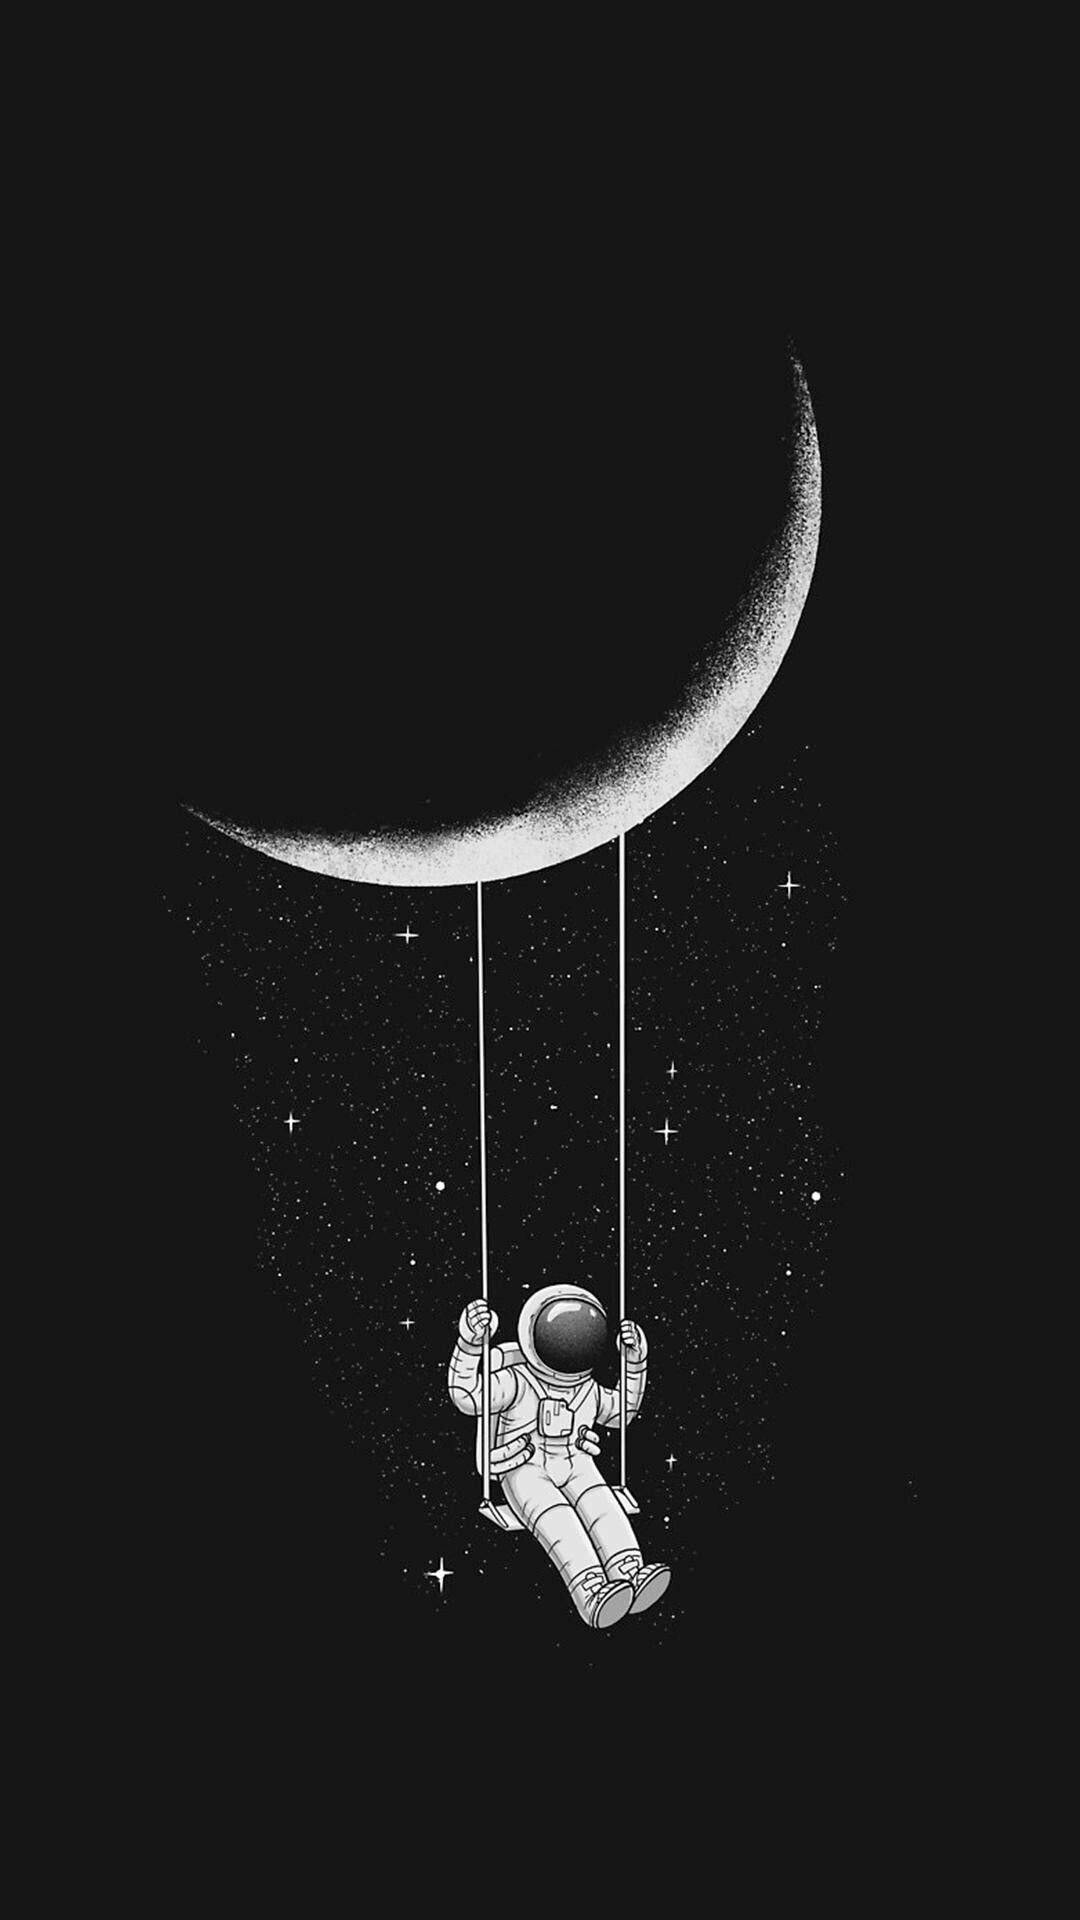 Astronaut Aesthetic Swinging On Crescent Moon